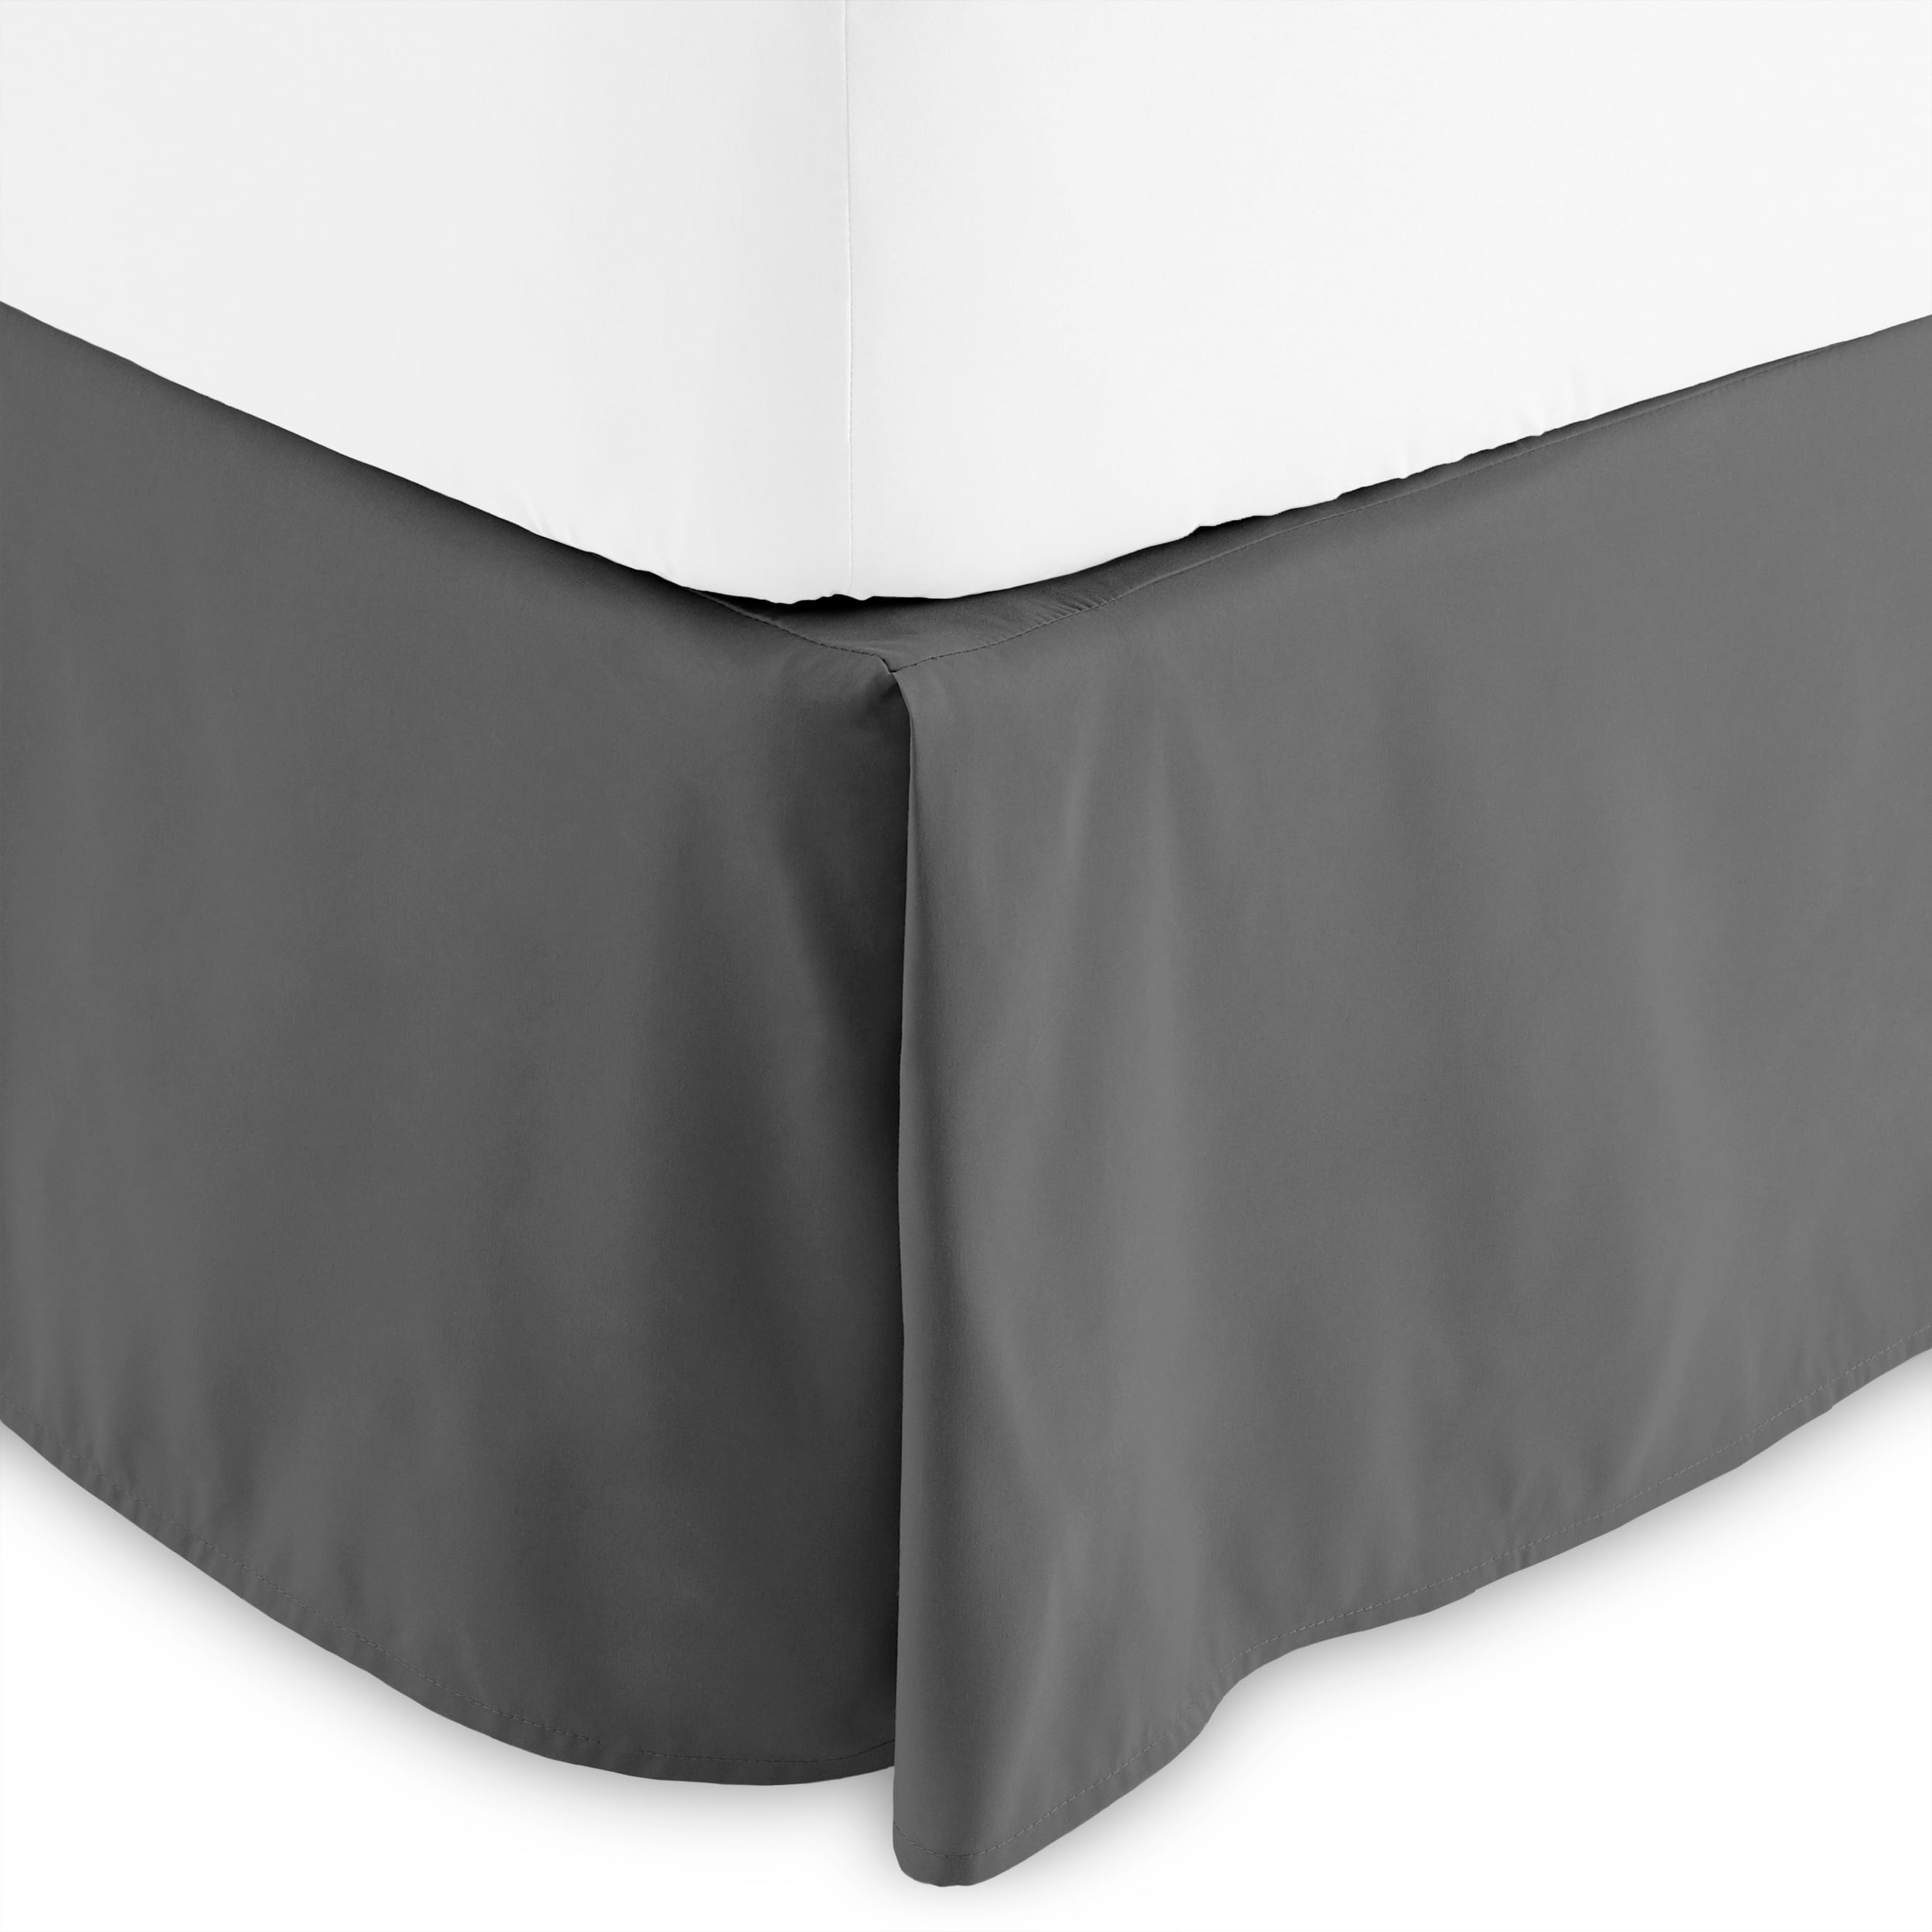 Bedding Queen Bed Skirt Double Brushed Premium Microfiber shrink resistant 